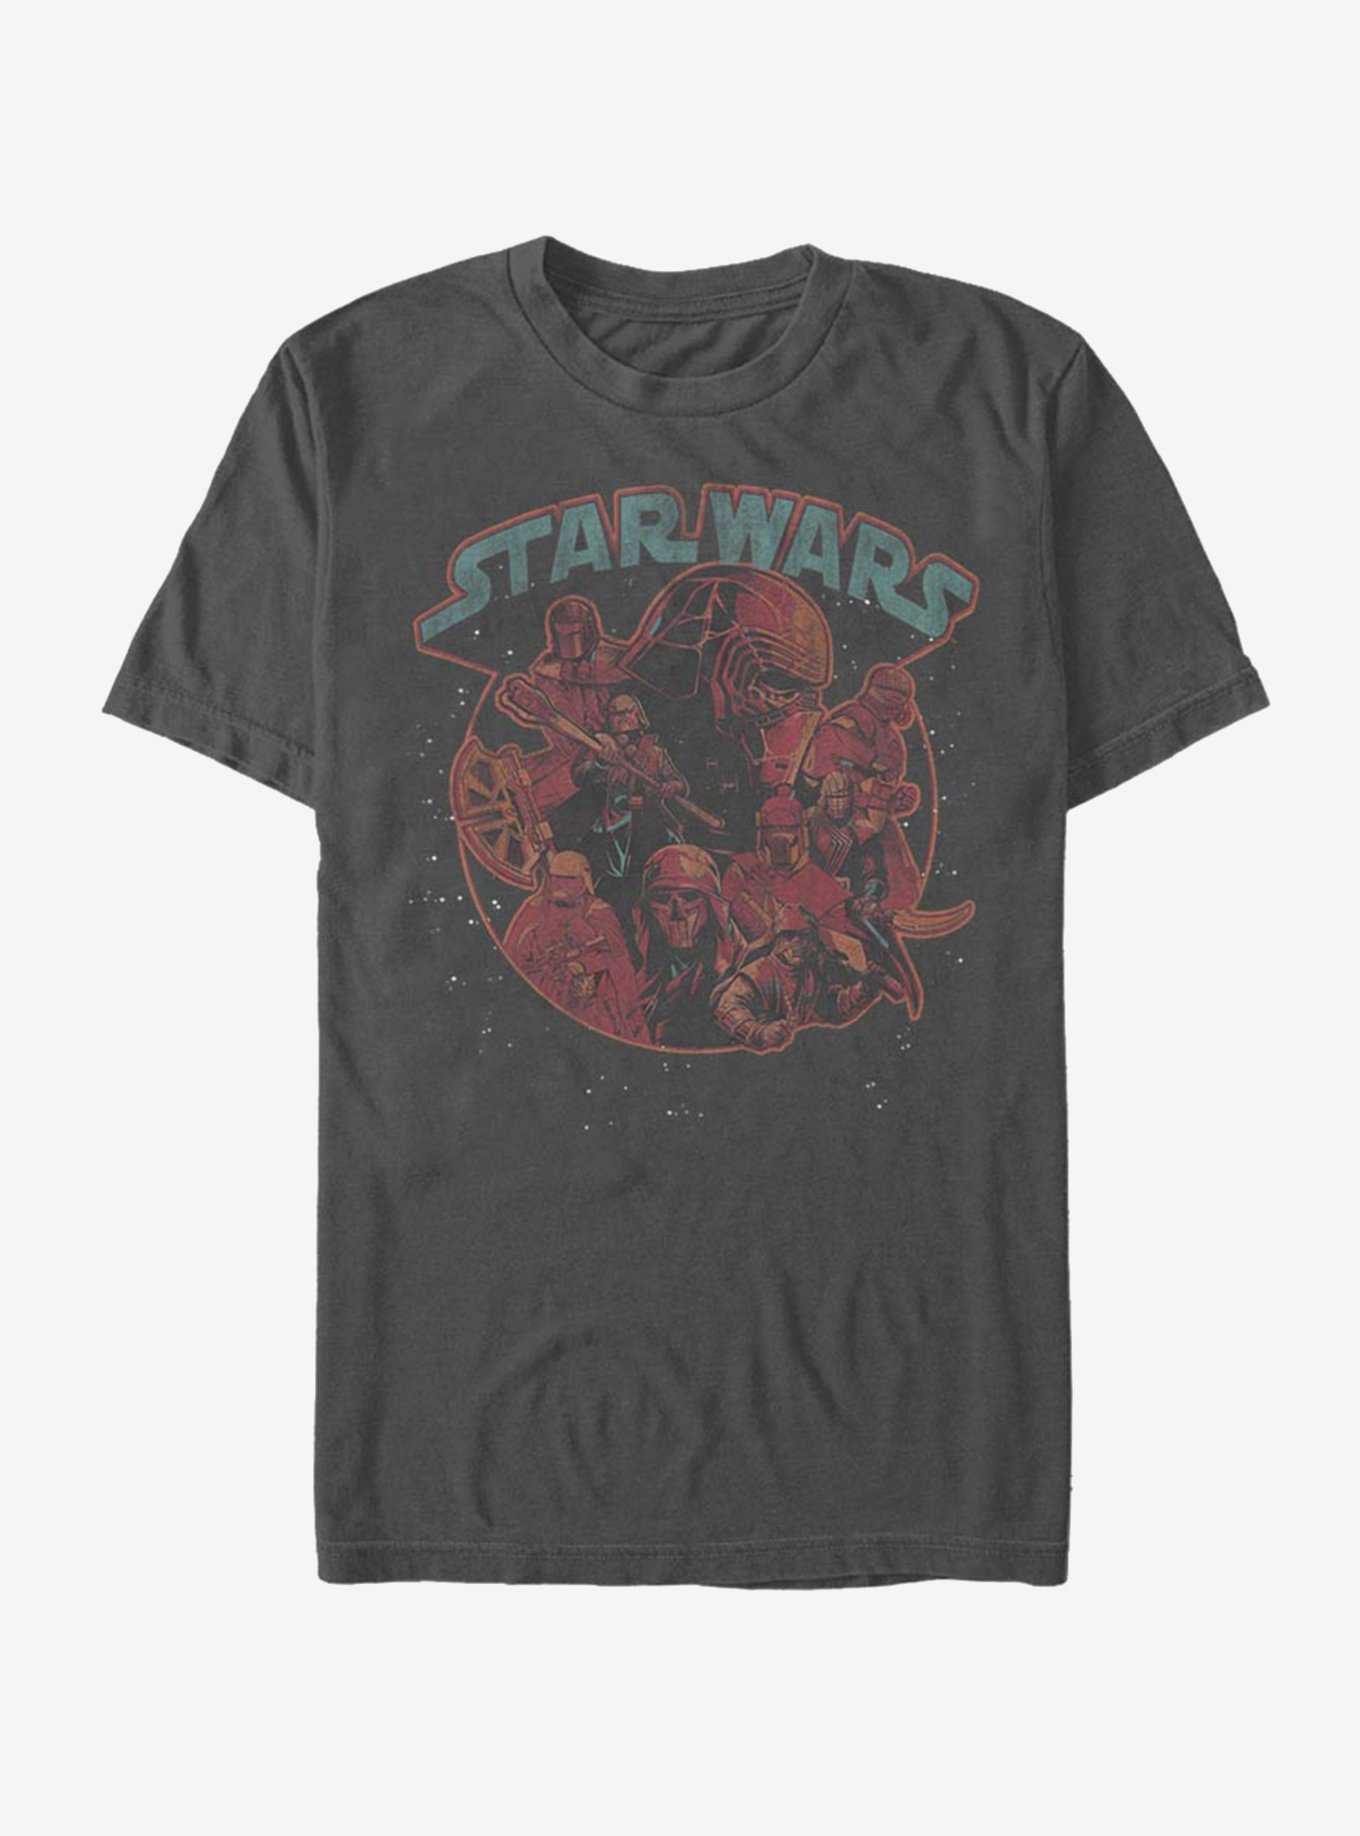 Star Wars Episode IX The Rise Of Skywalker Retro Villians T-Shirt, , hi-res